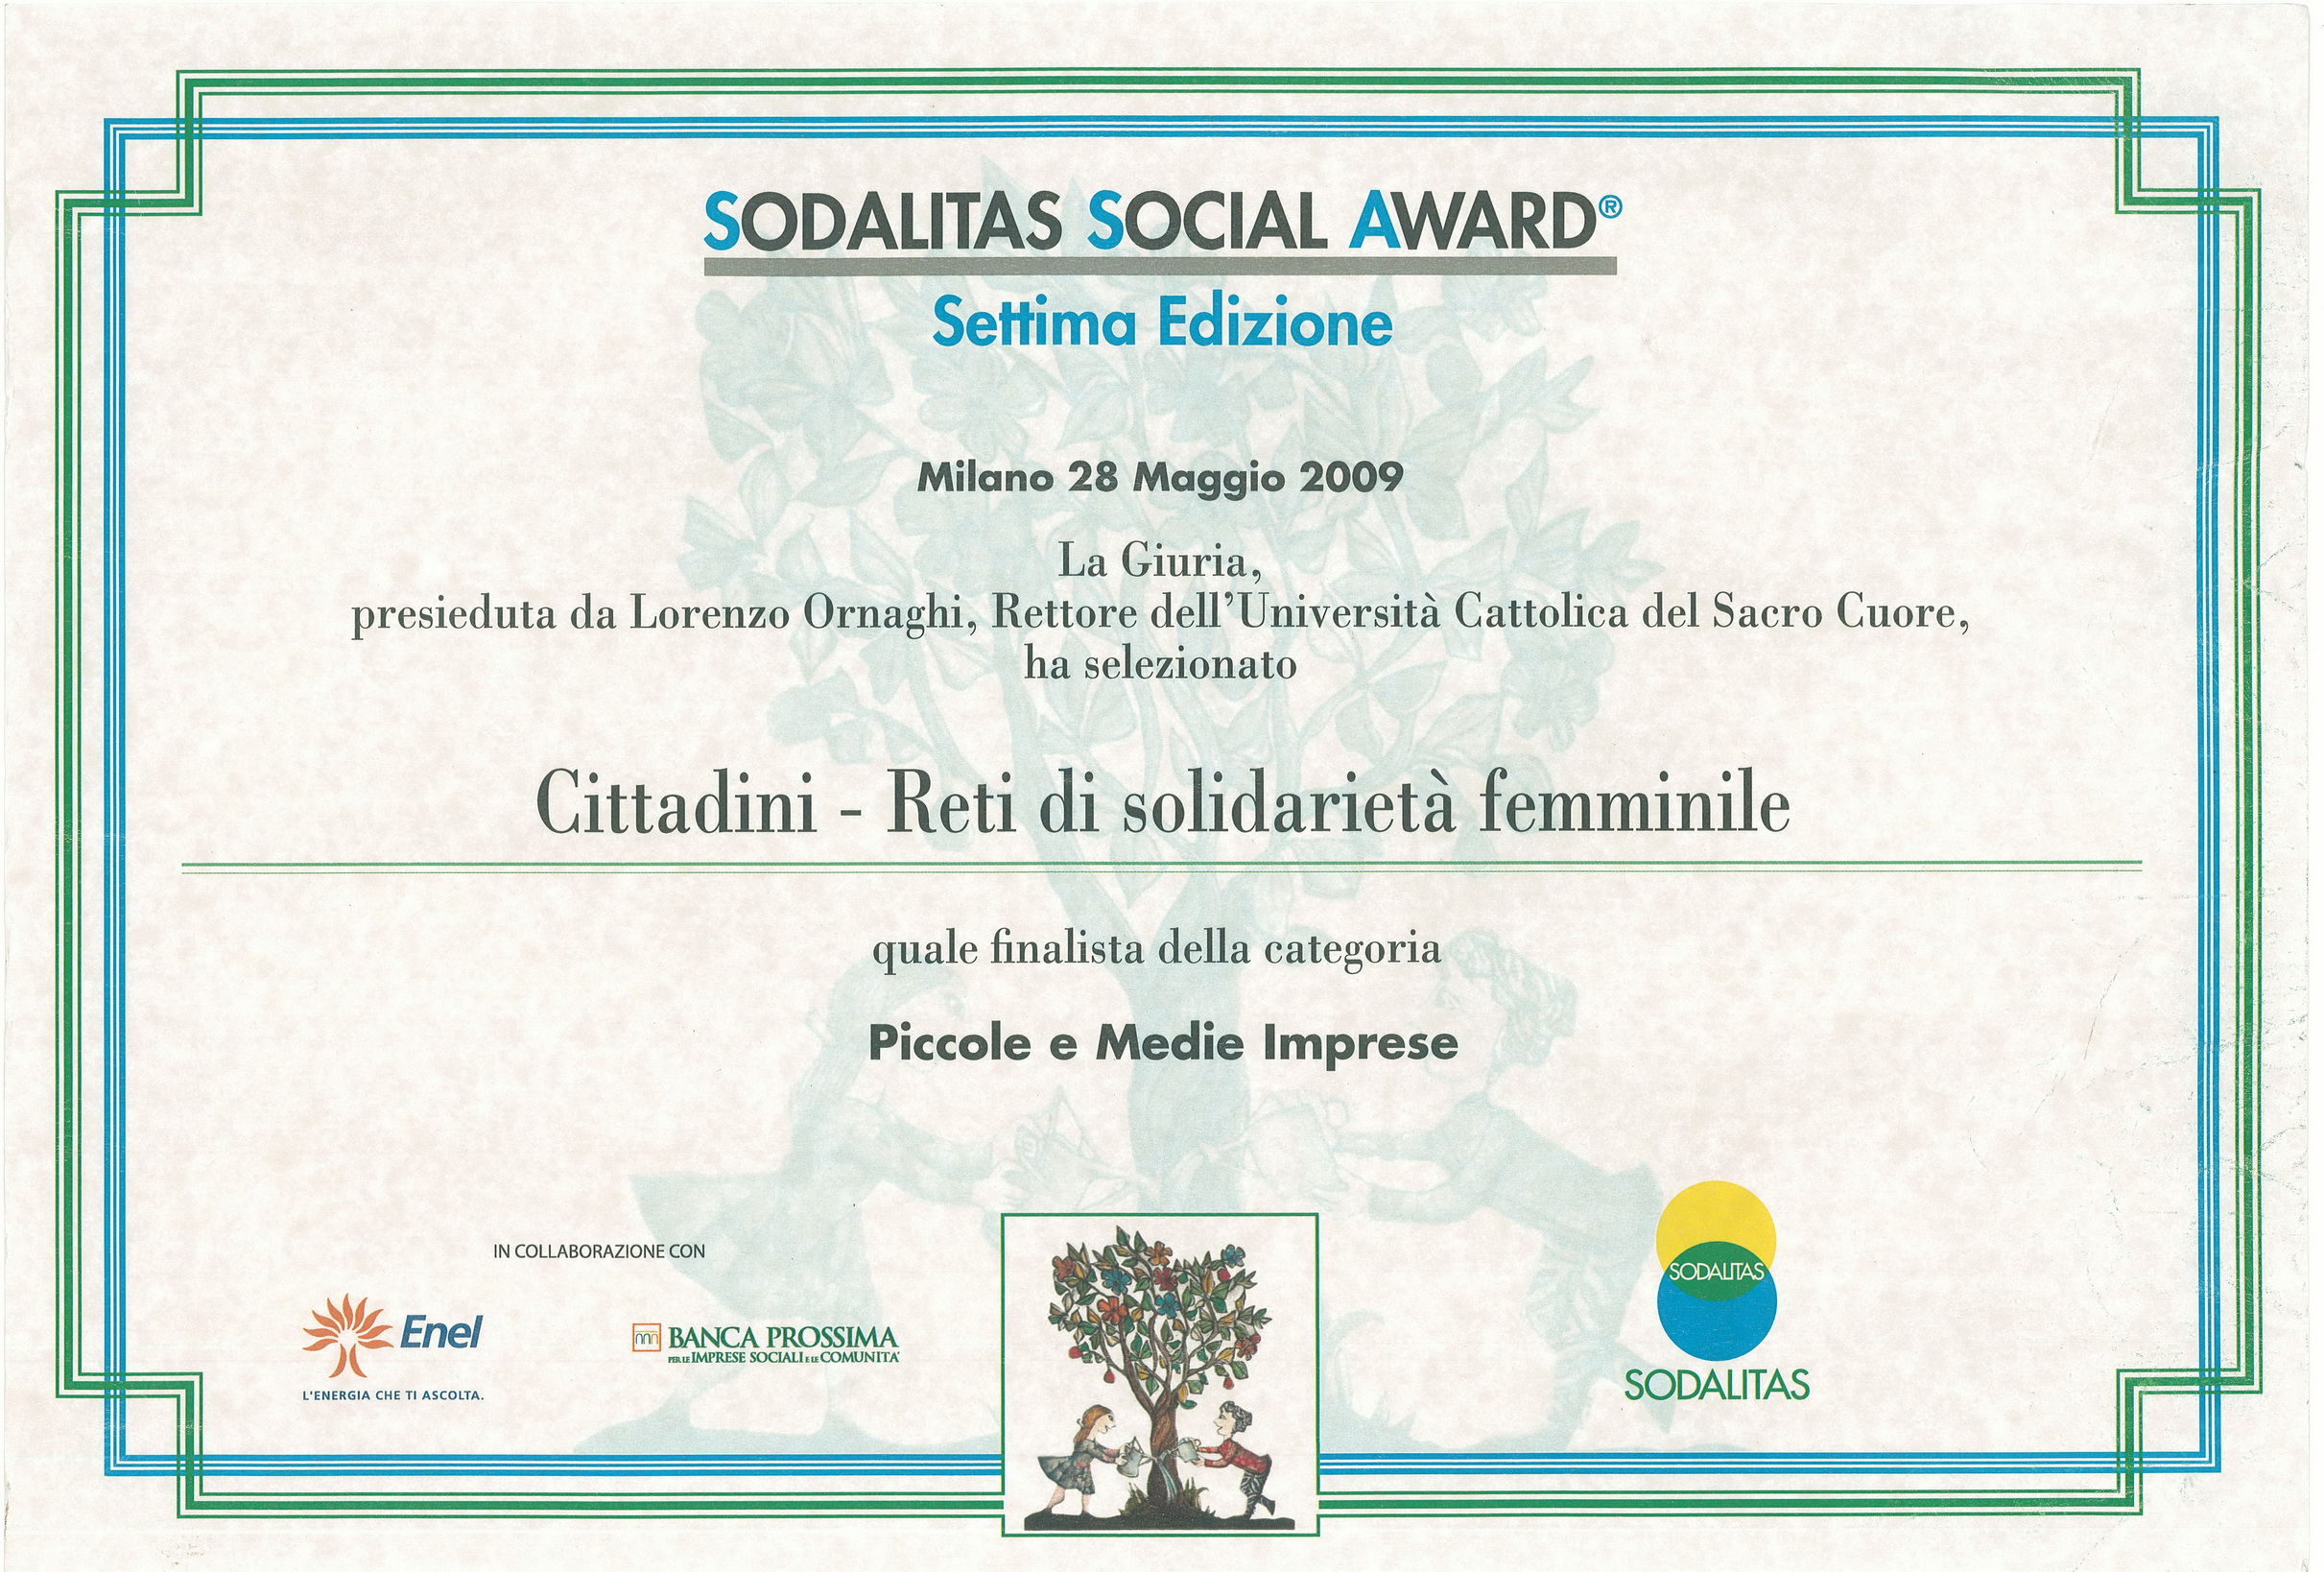 Premio Sodalitas 2009 - Cittadini spa